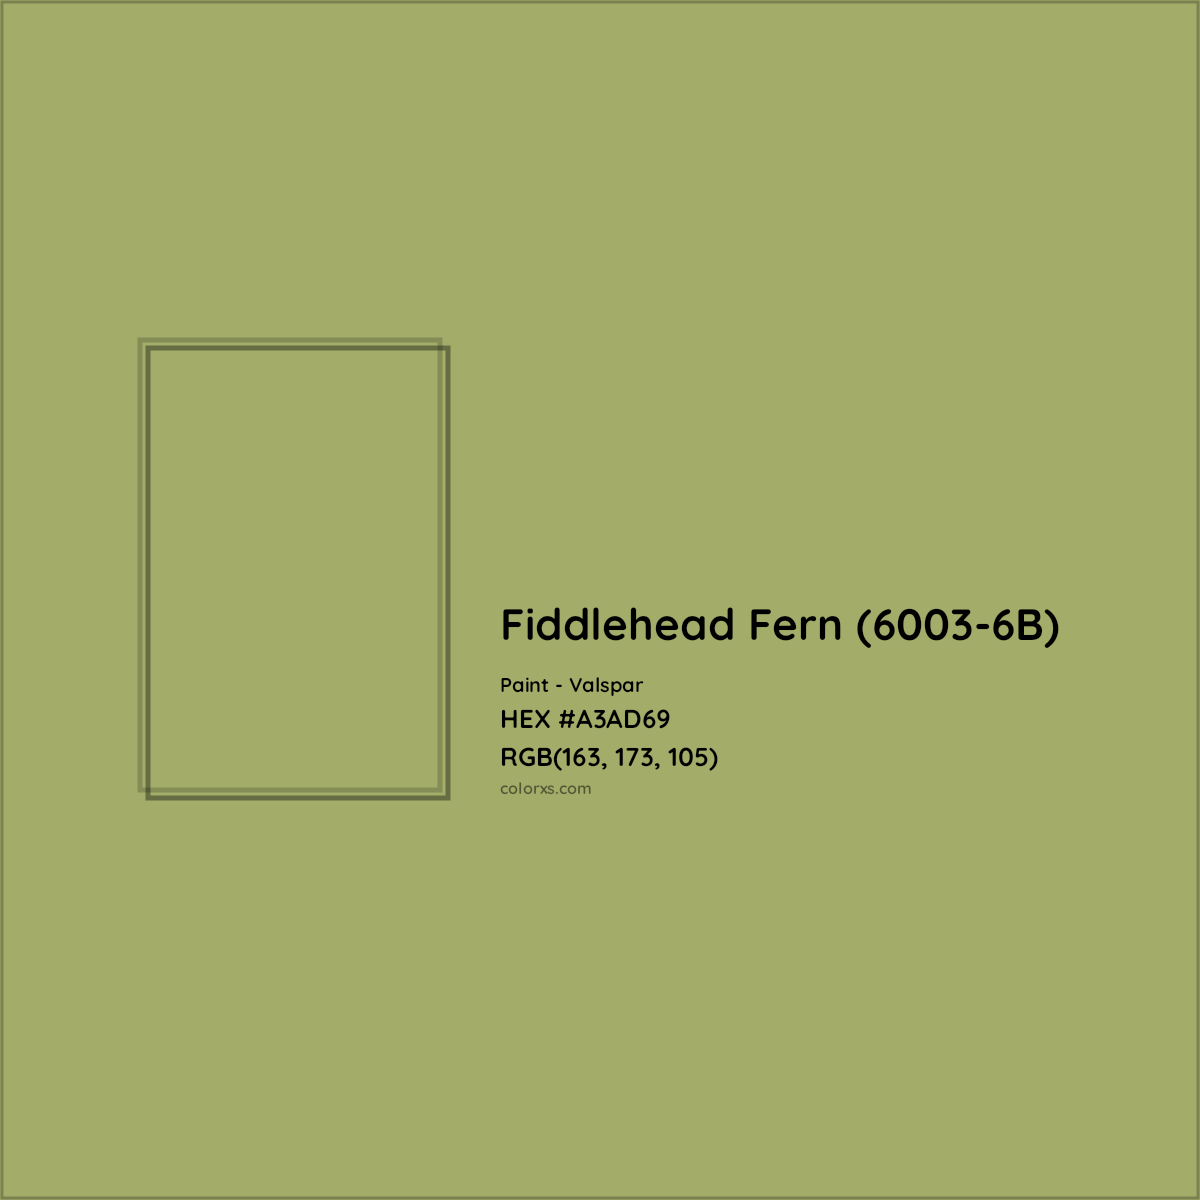 HEX #A3AD69 Fiddlehead Fern (6003-6B) Paint Valspar - Color Code